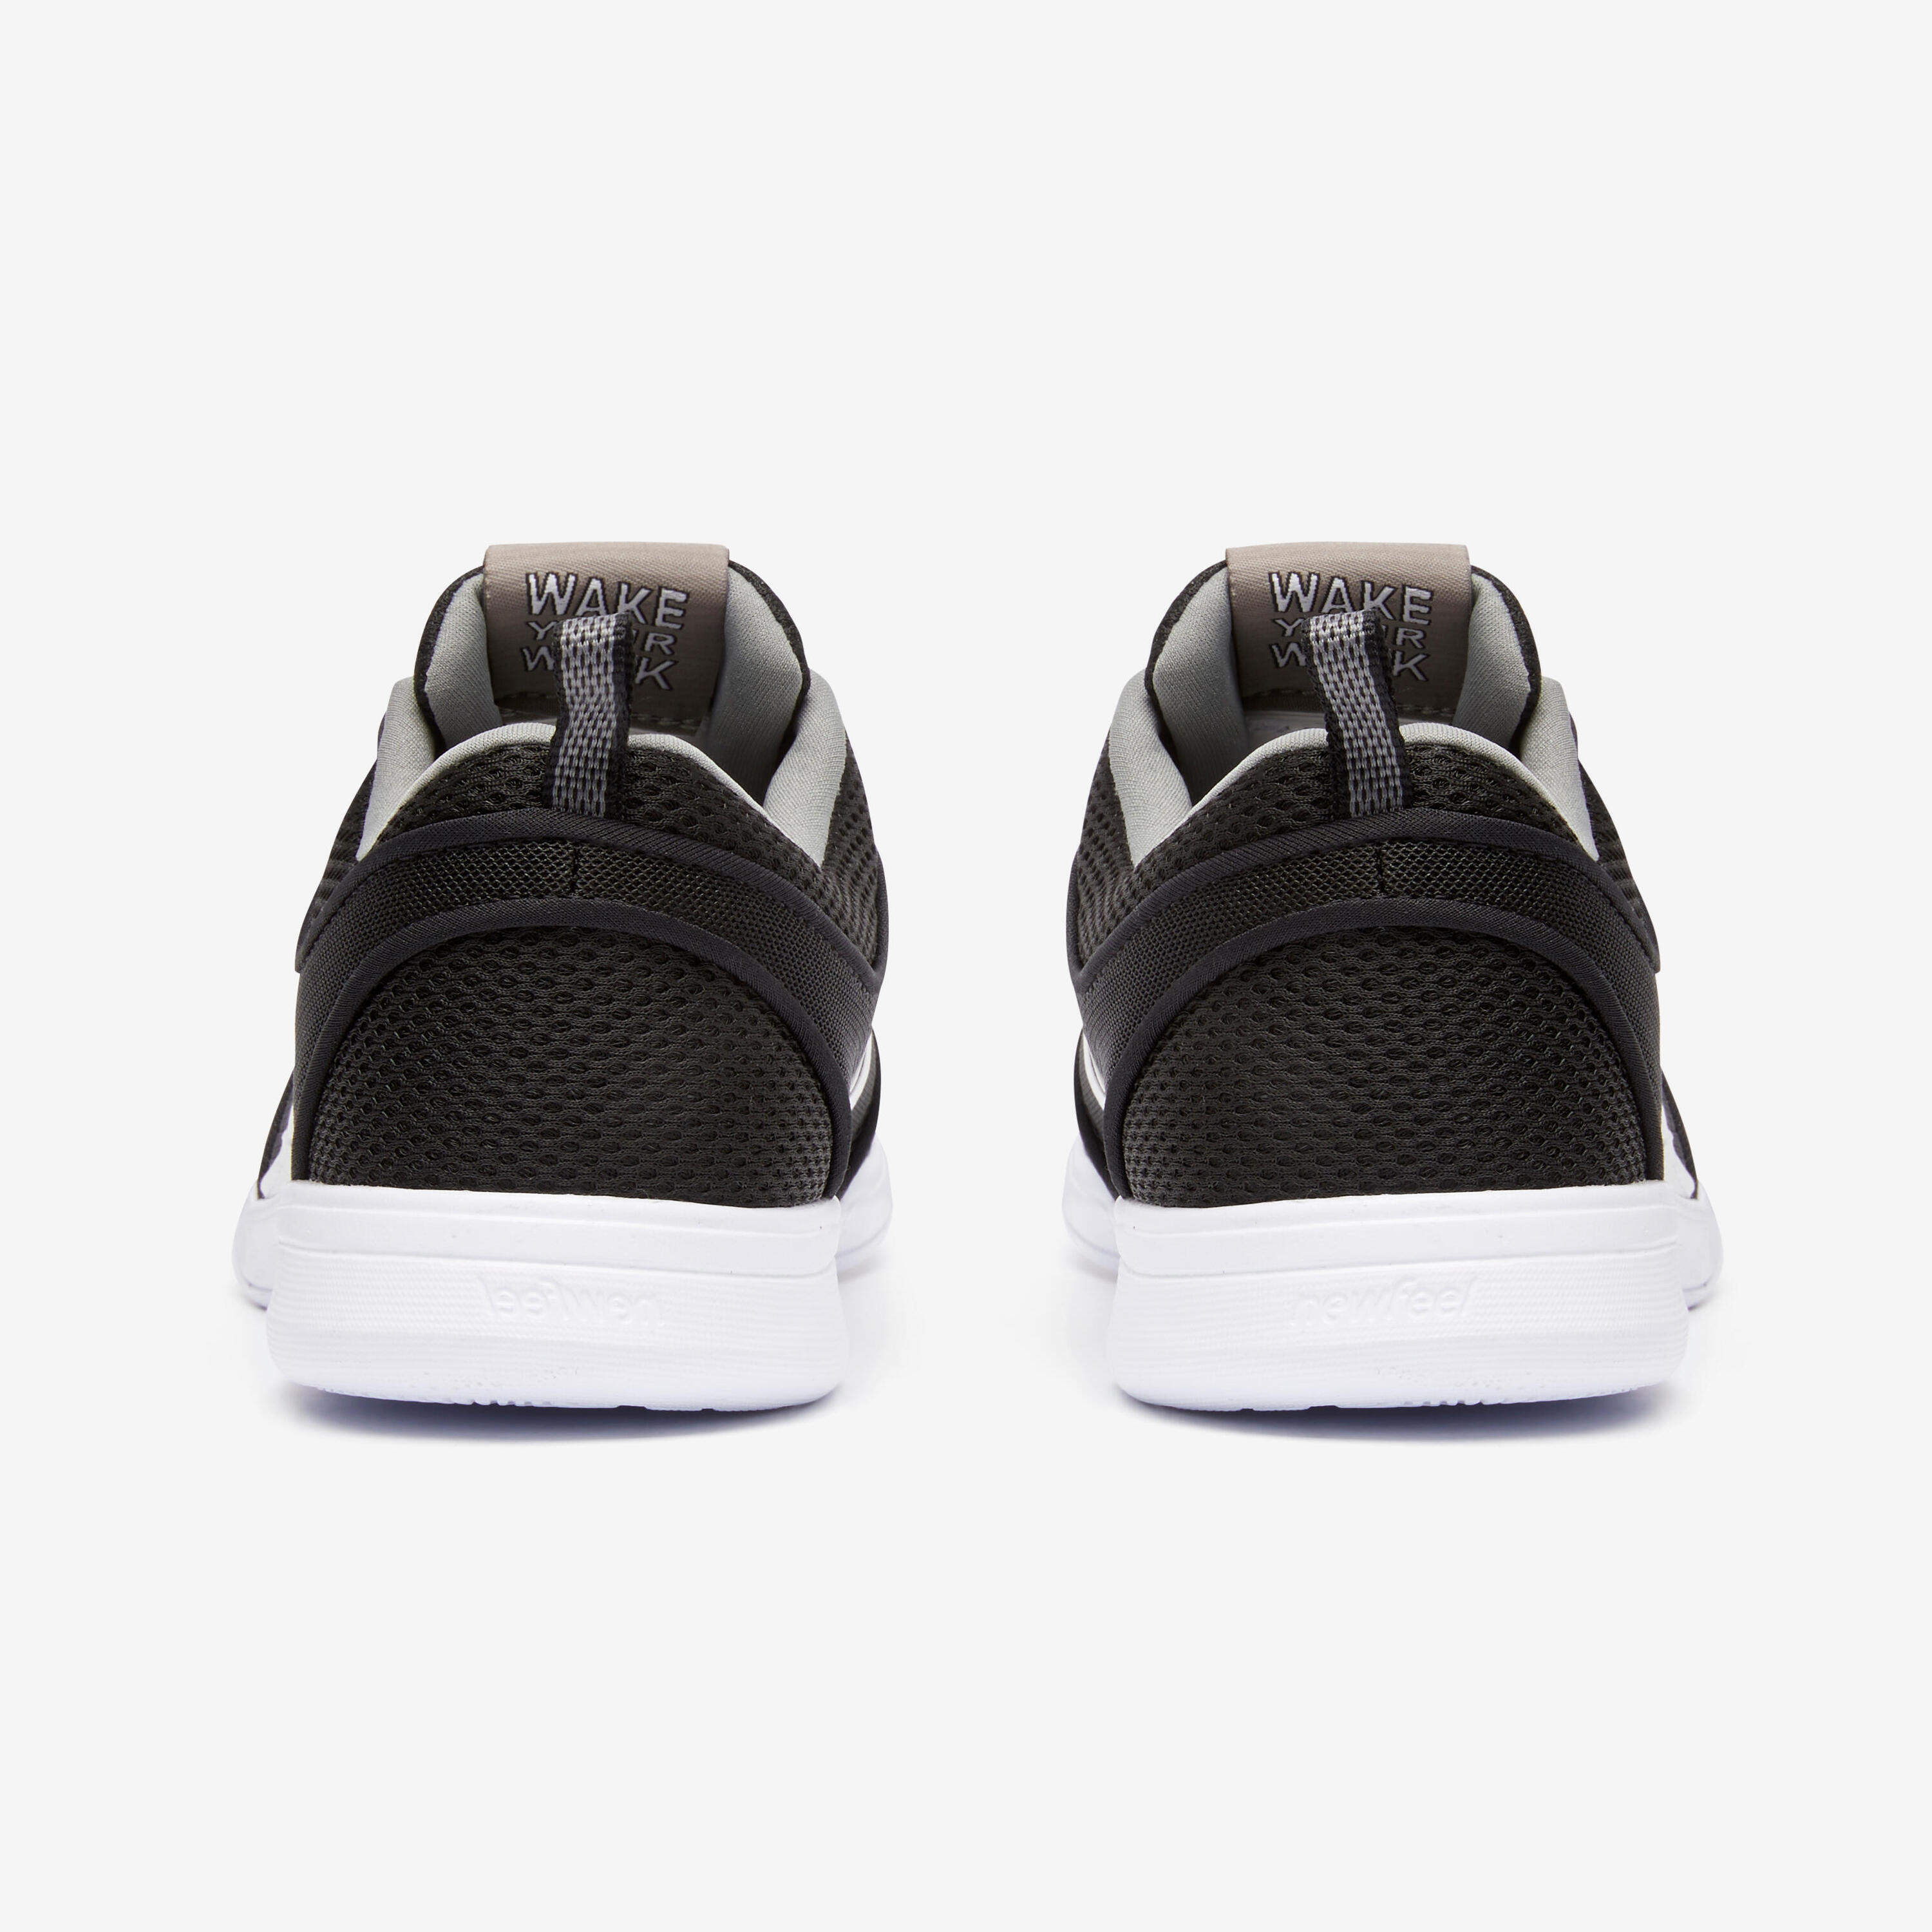 Soft 140 Mesh Men's Urban Walking Shoes - Black/White 8/8